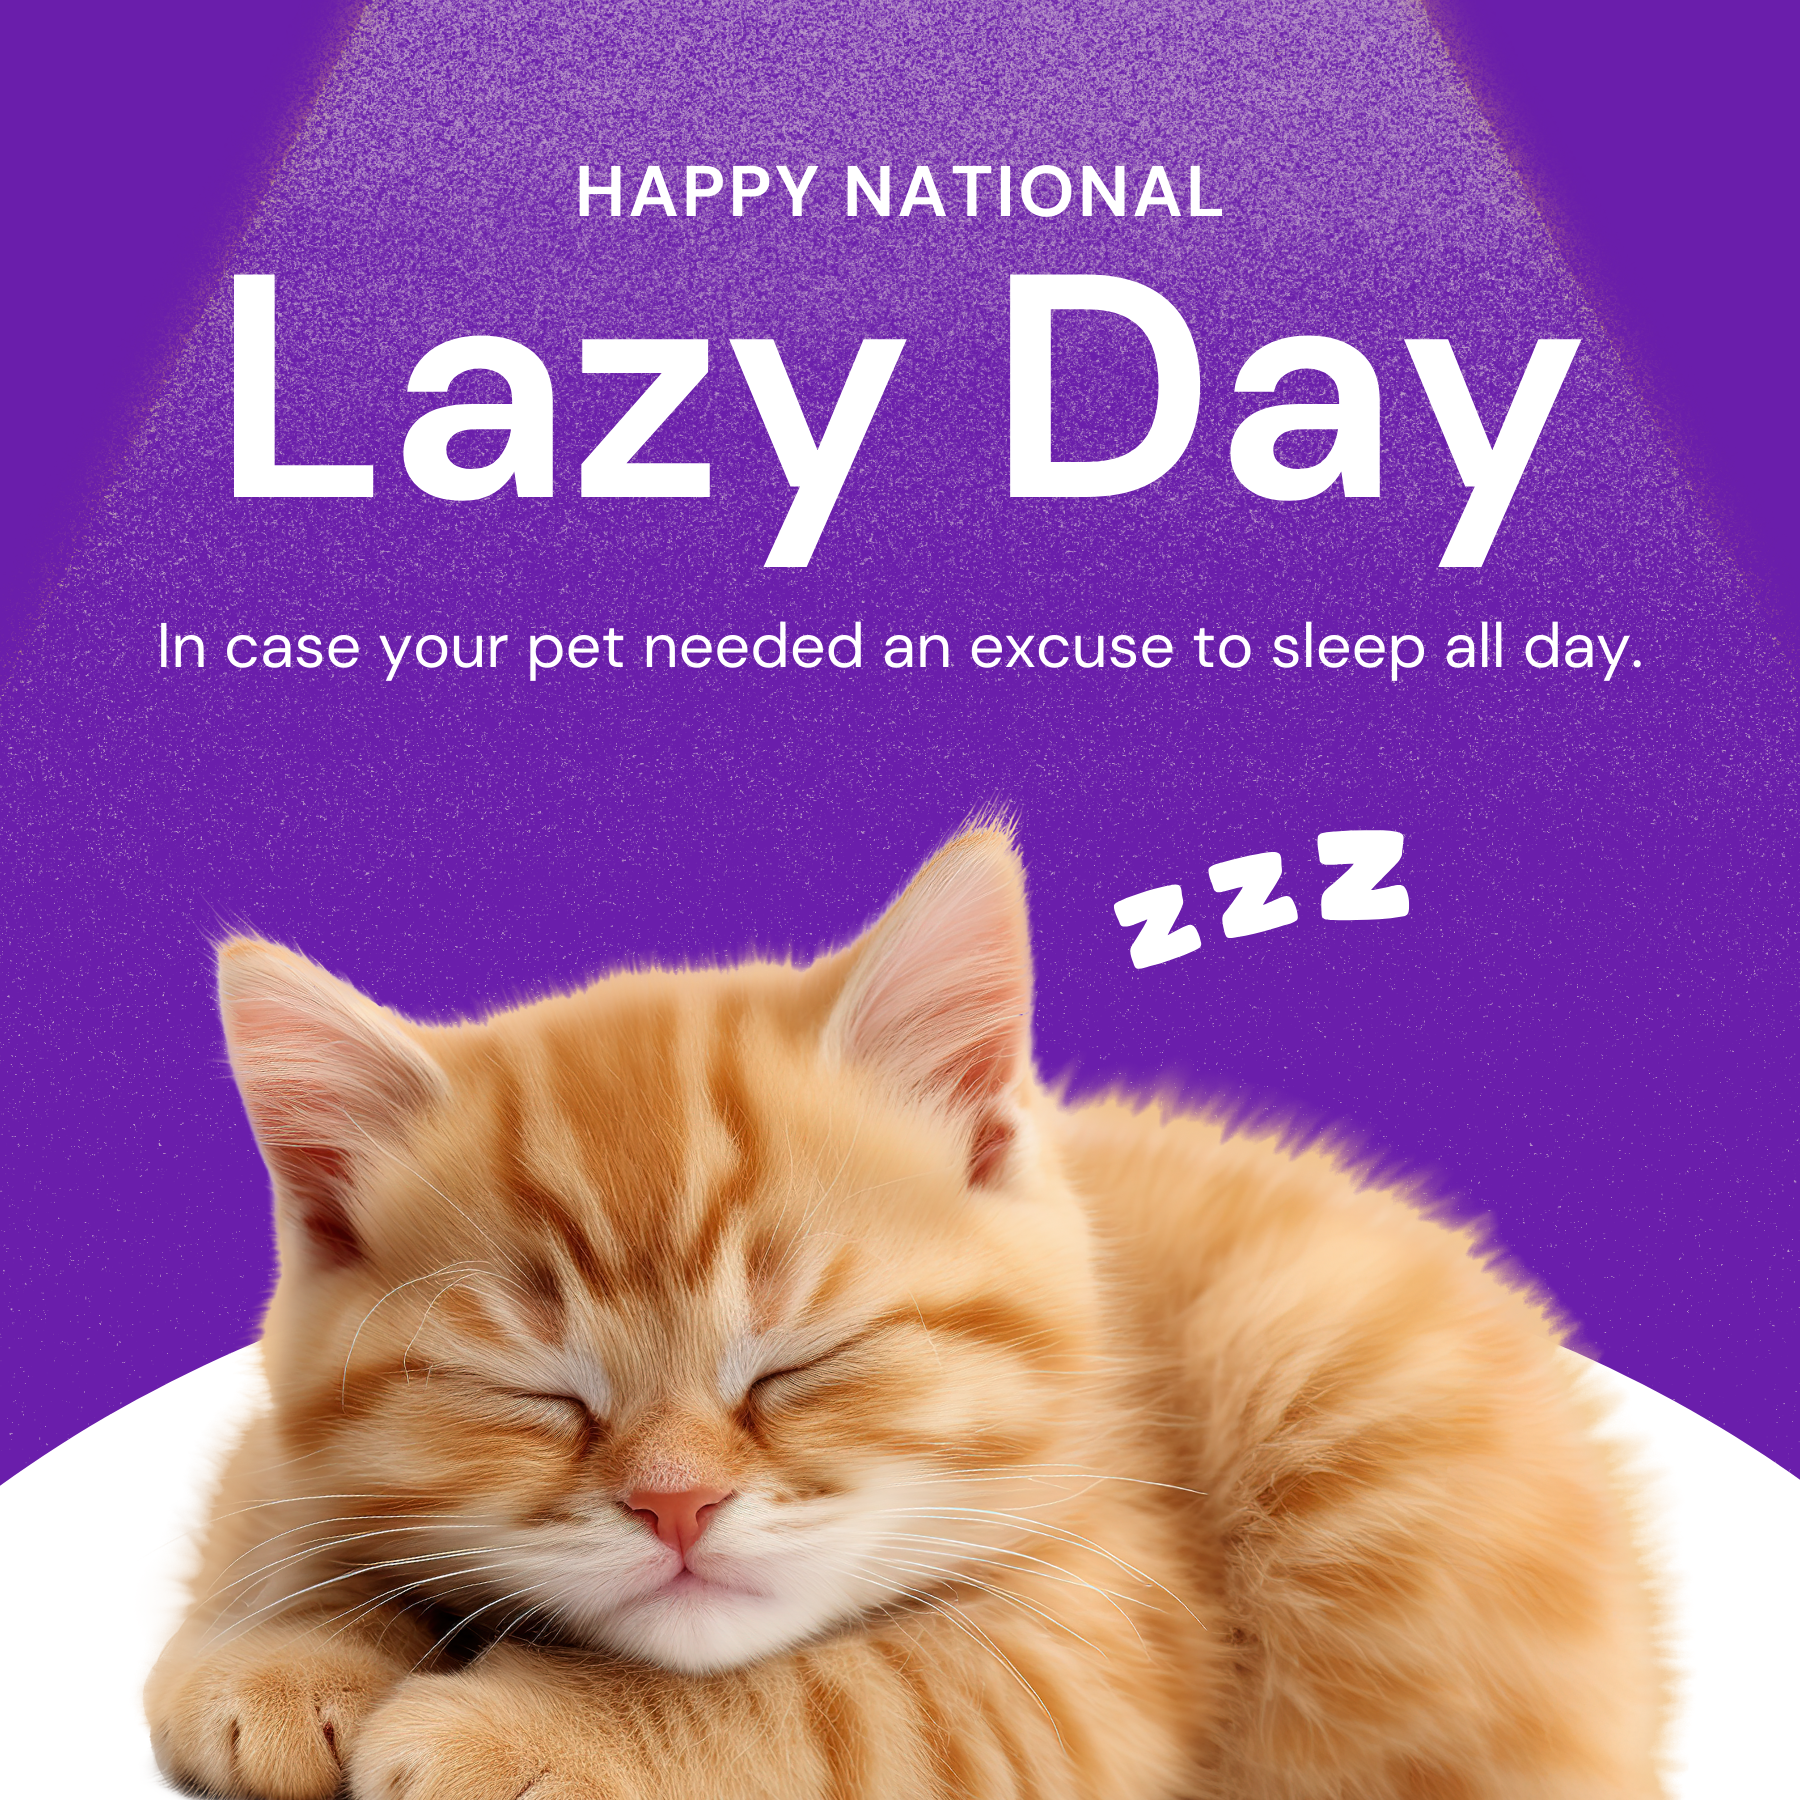 Happy National Lazy Day